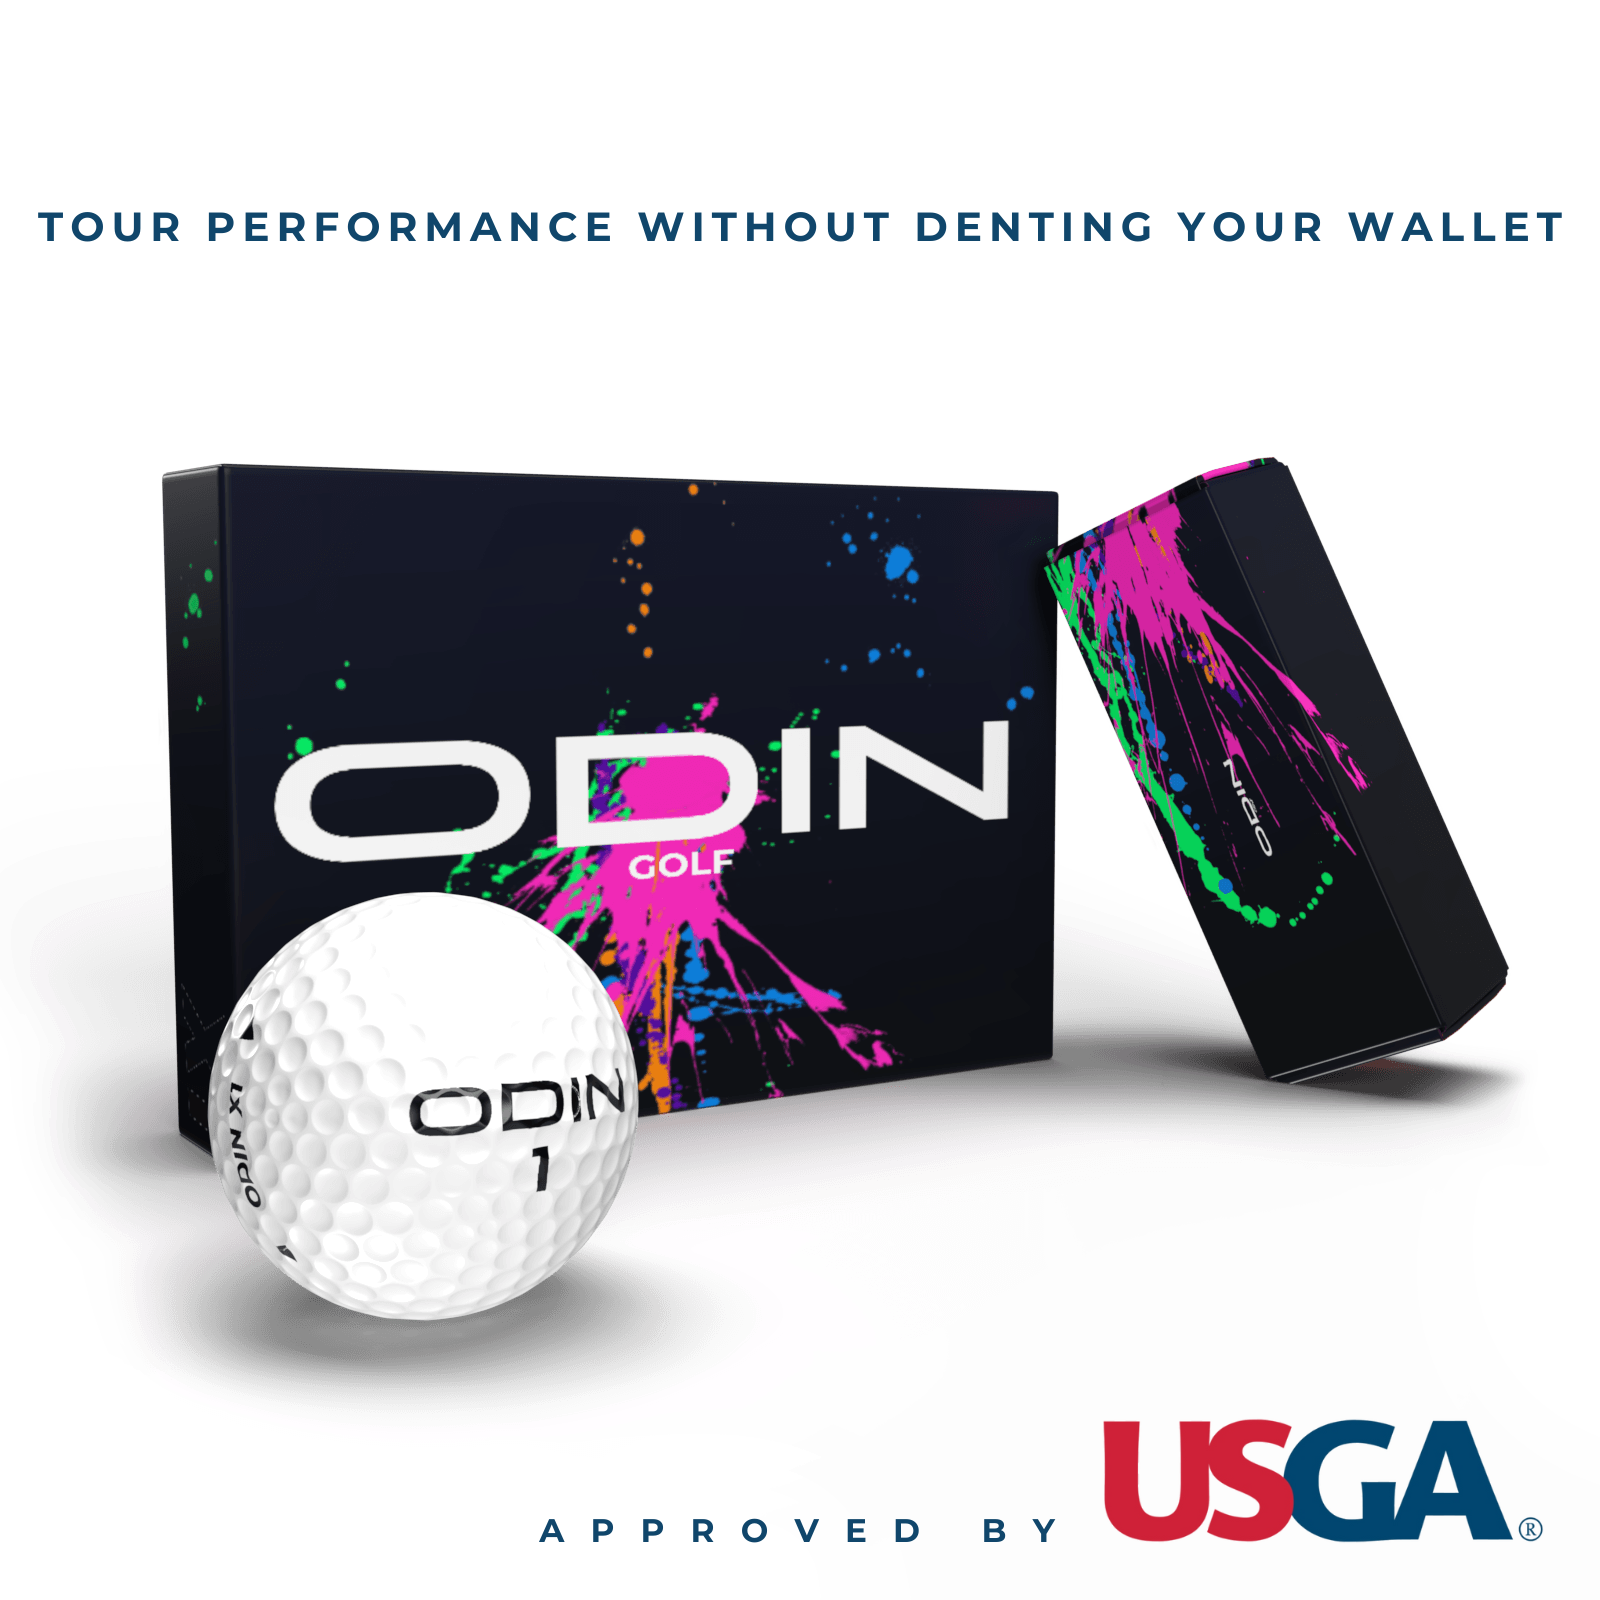 Odin golf balls review - USGA approved